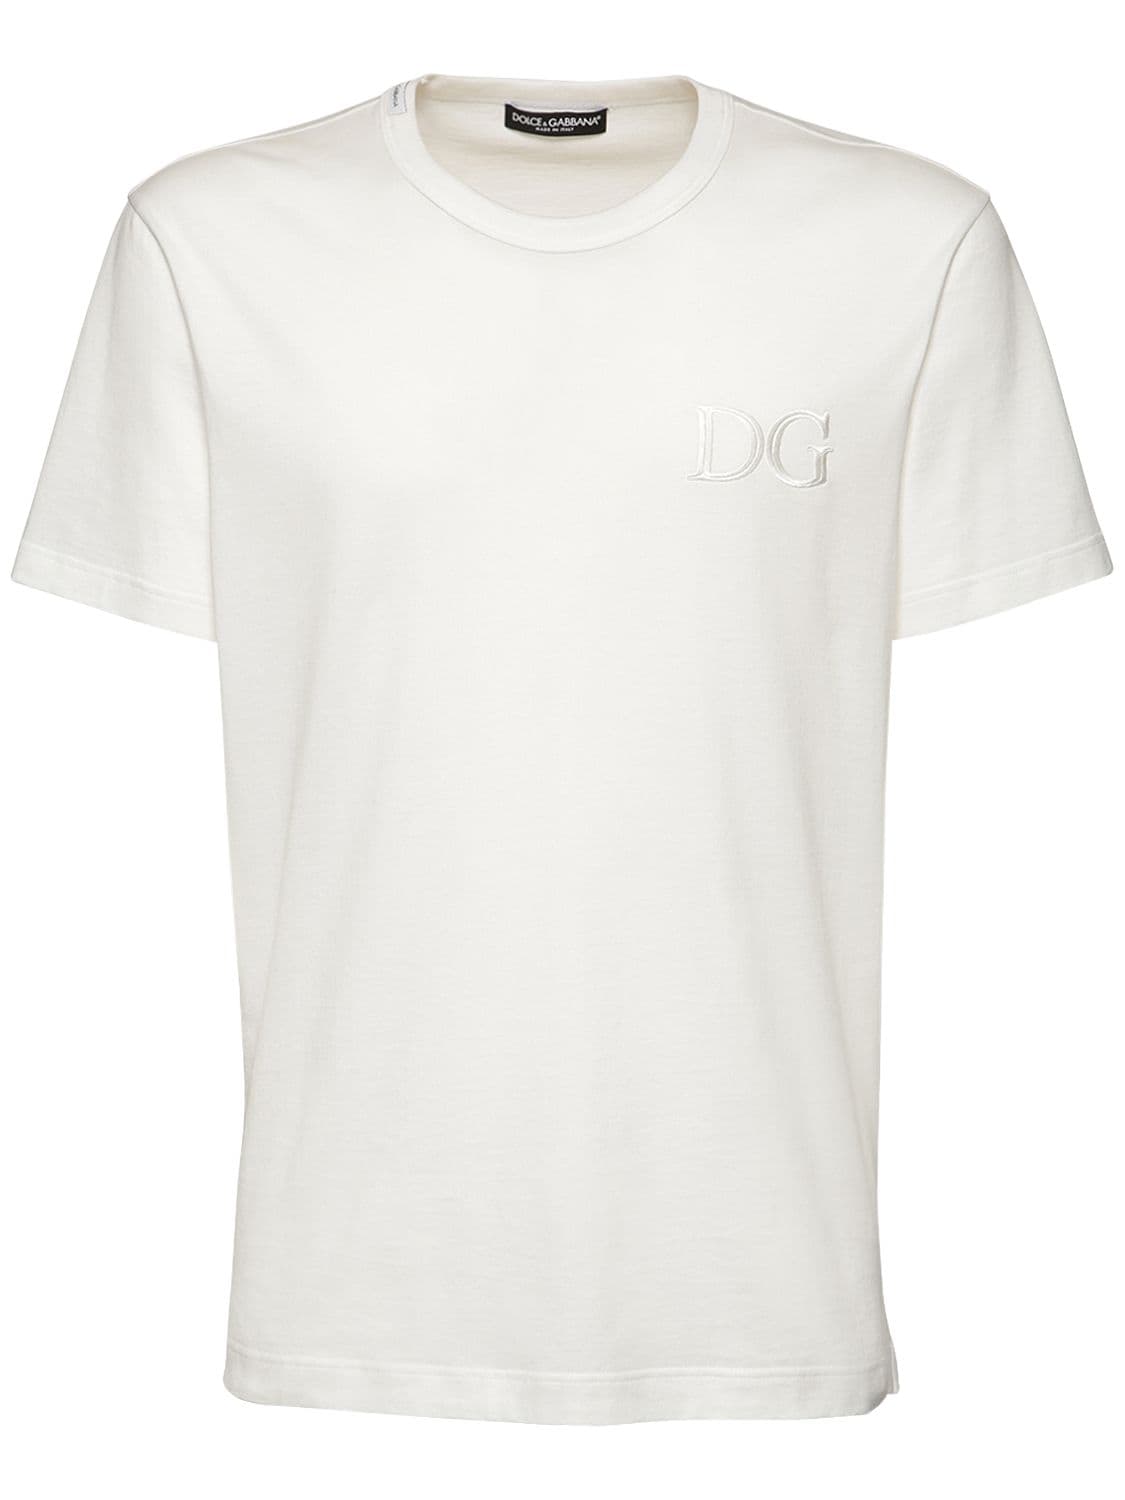 Dolce & Gabbana - Dg embroidery cotton t-shirt - White | Luisaviaroma